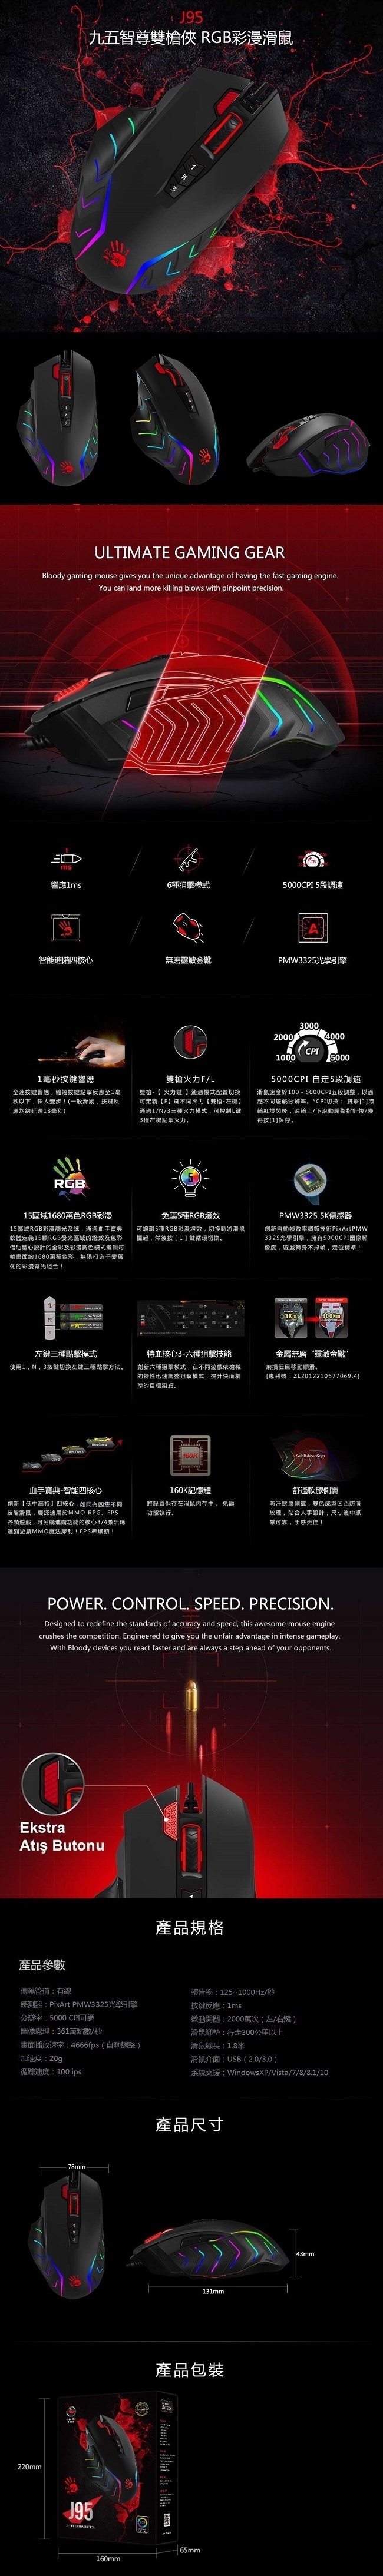 【A4 bloody】九五智尊雙槍俠 RGB 電競滑鼠-J95(未激活)+贈NTD350激活卡